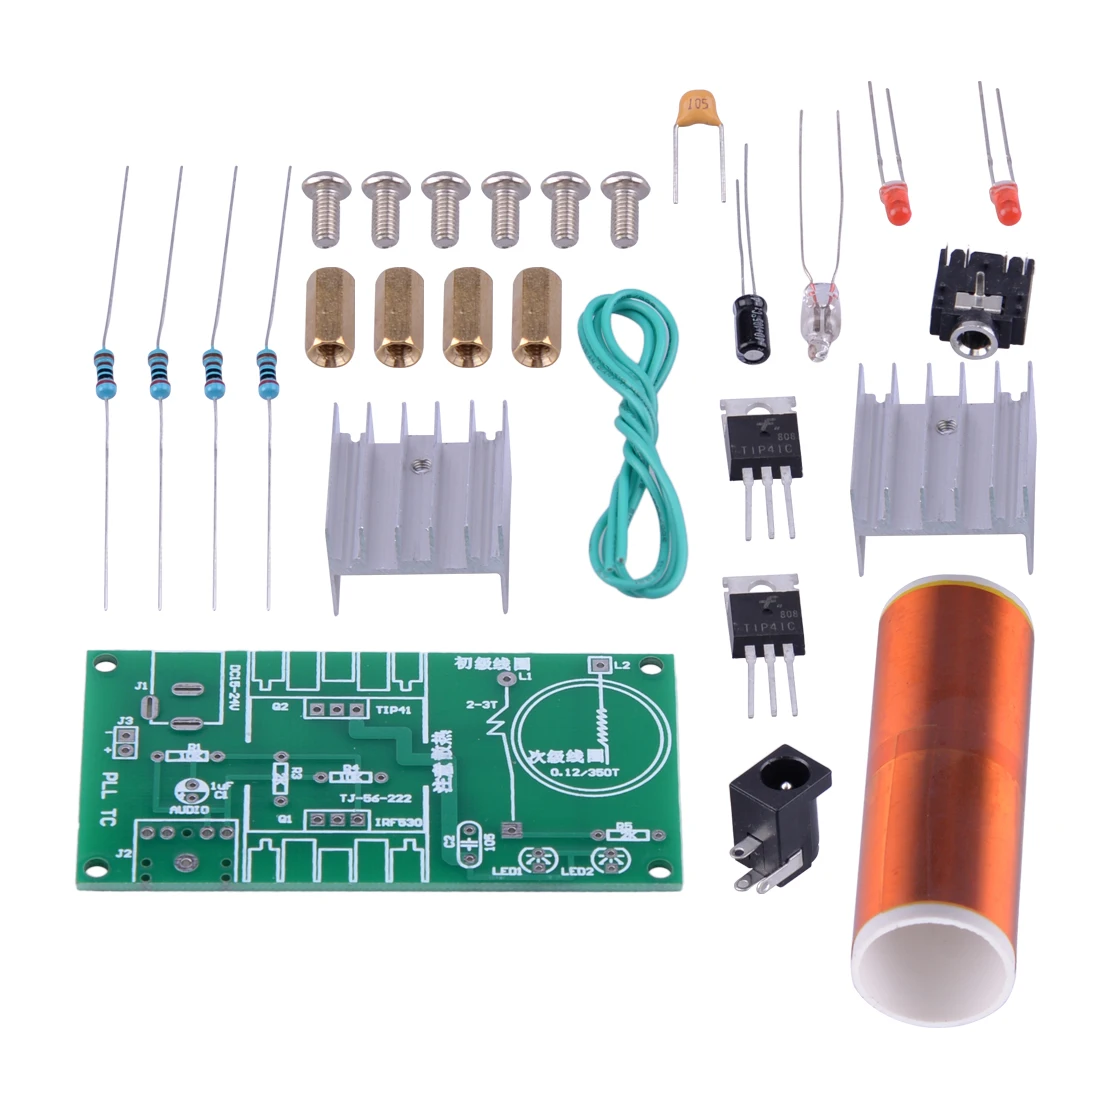 Mini Tesla Coil Plasma Speaker Kit Electronic Field Music DIY Project Play Gift 